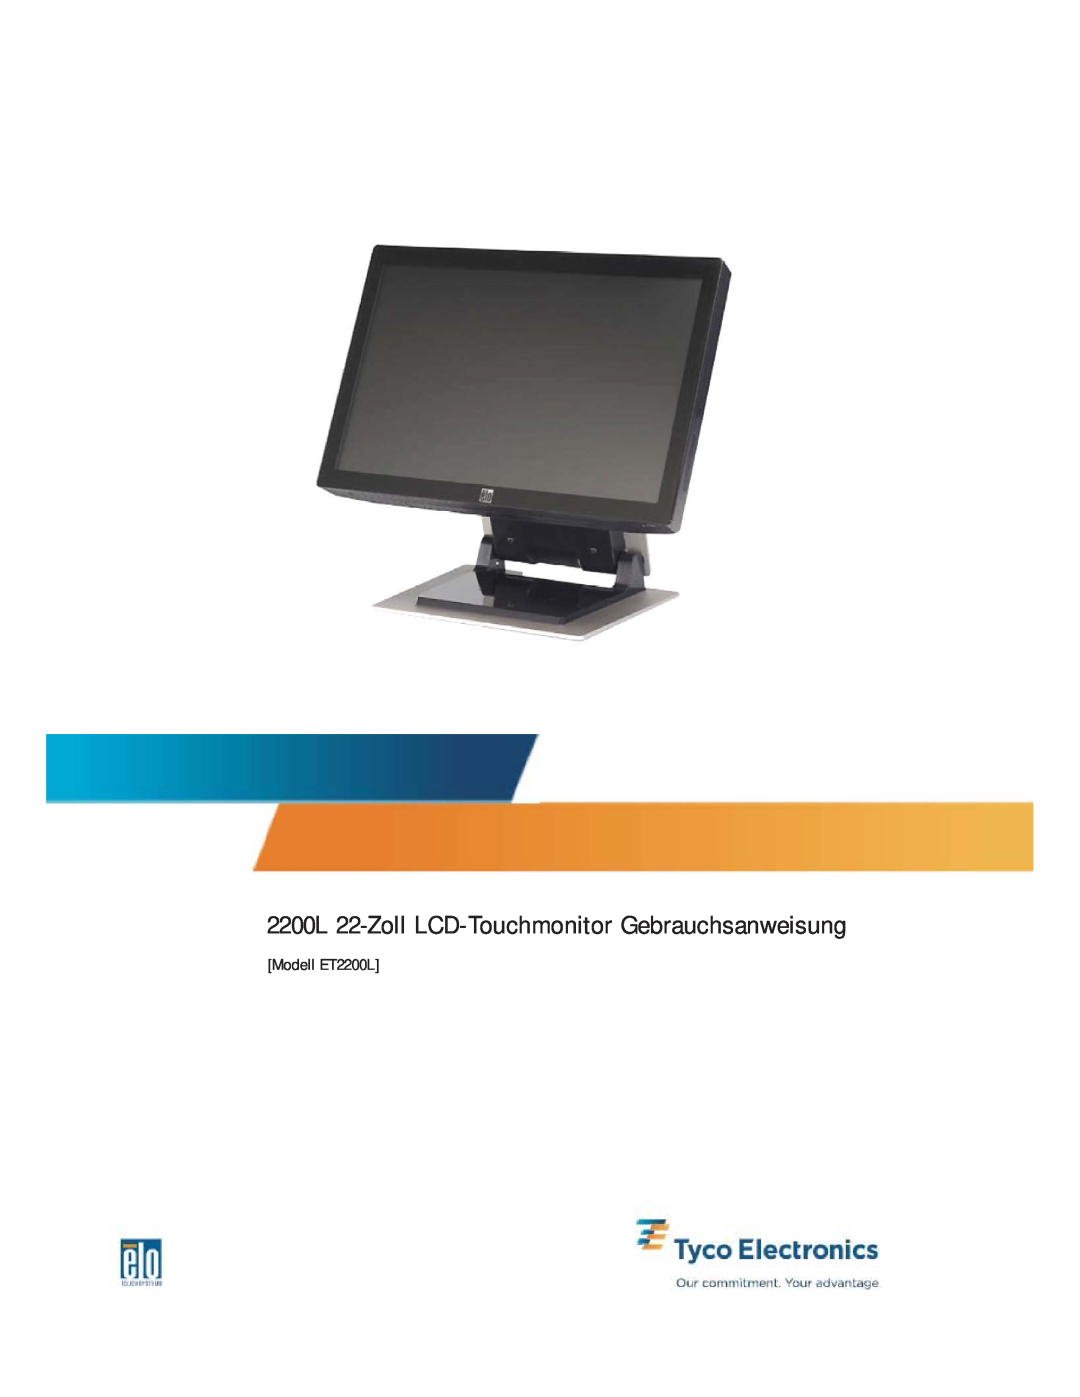 Elo TouchSystems manual 2200L 22-Zoll LCD-Touchmonitor Gebrauchsanweisung, Modell ET2200L 